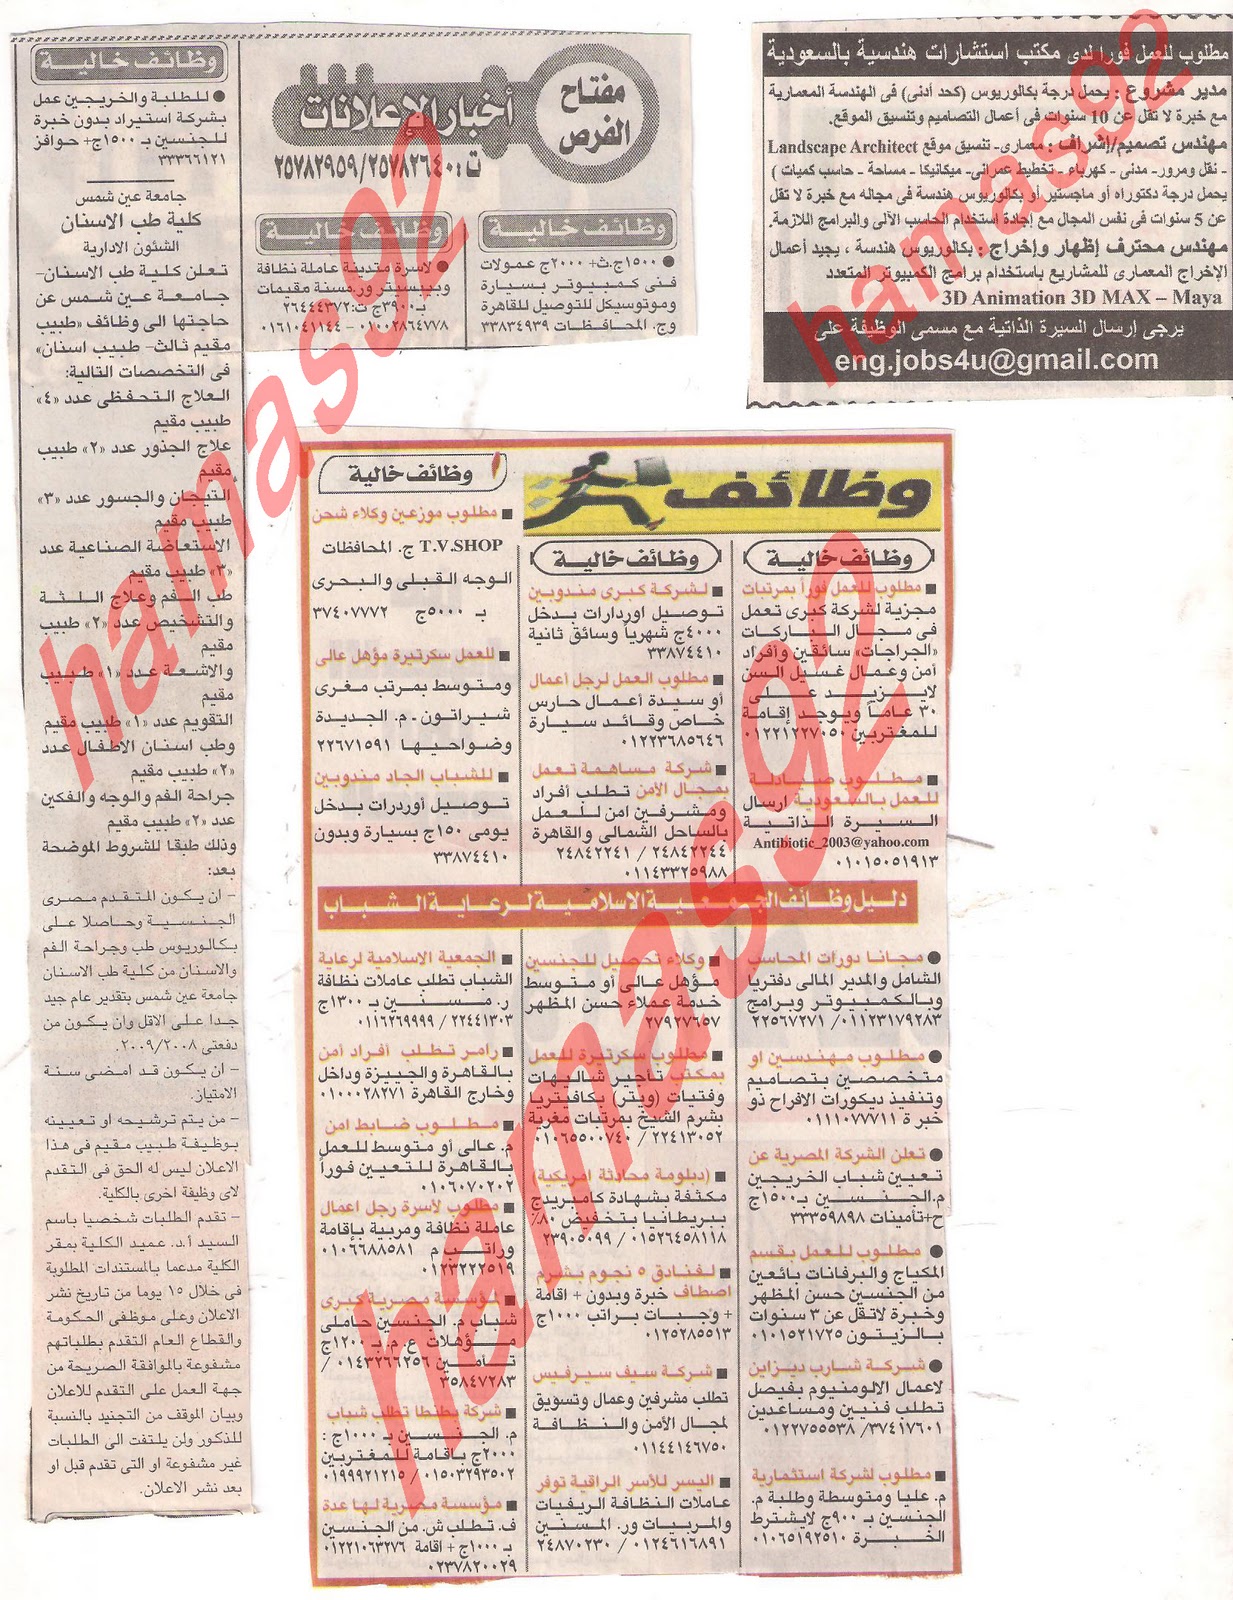 وظائف مصر 15\10\2011 , وظائف جريده الاخبار السبت 15 \10\2011  Picture+003